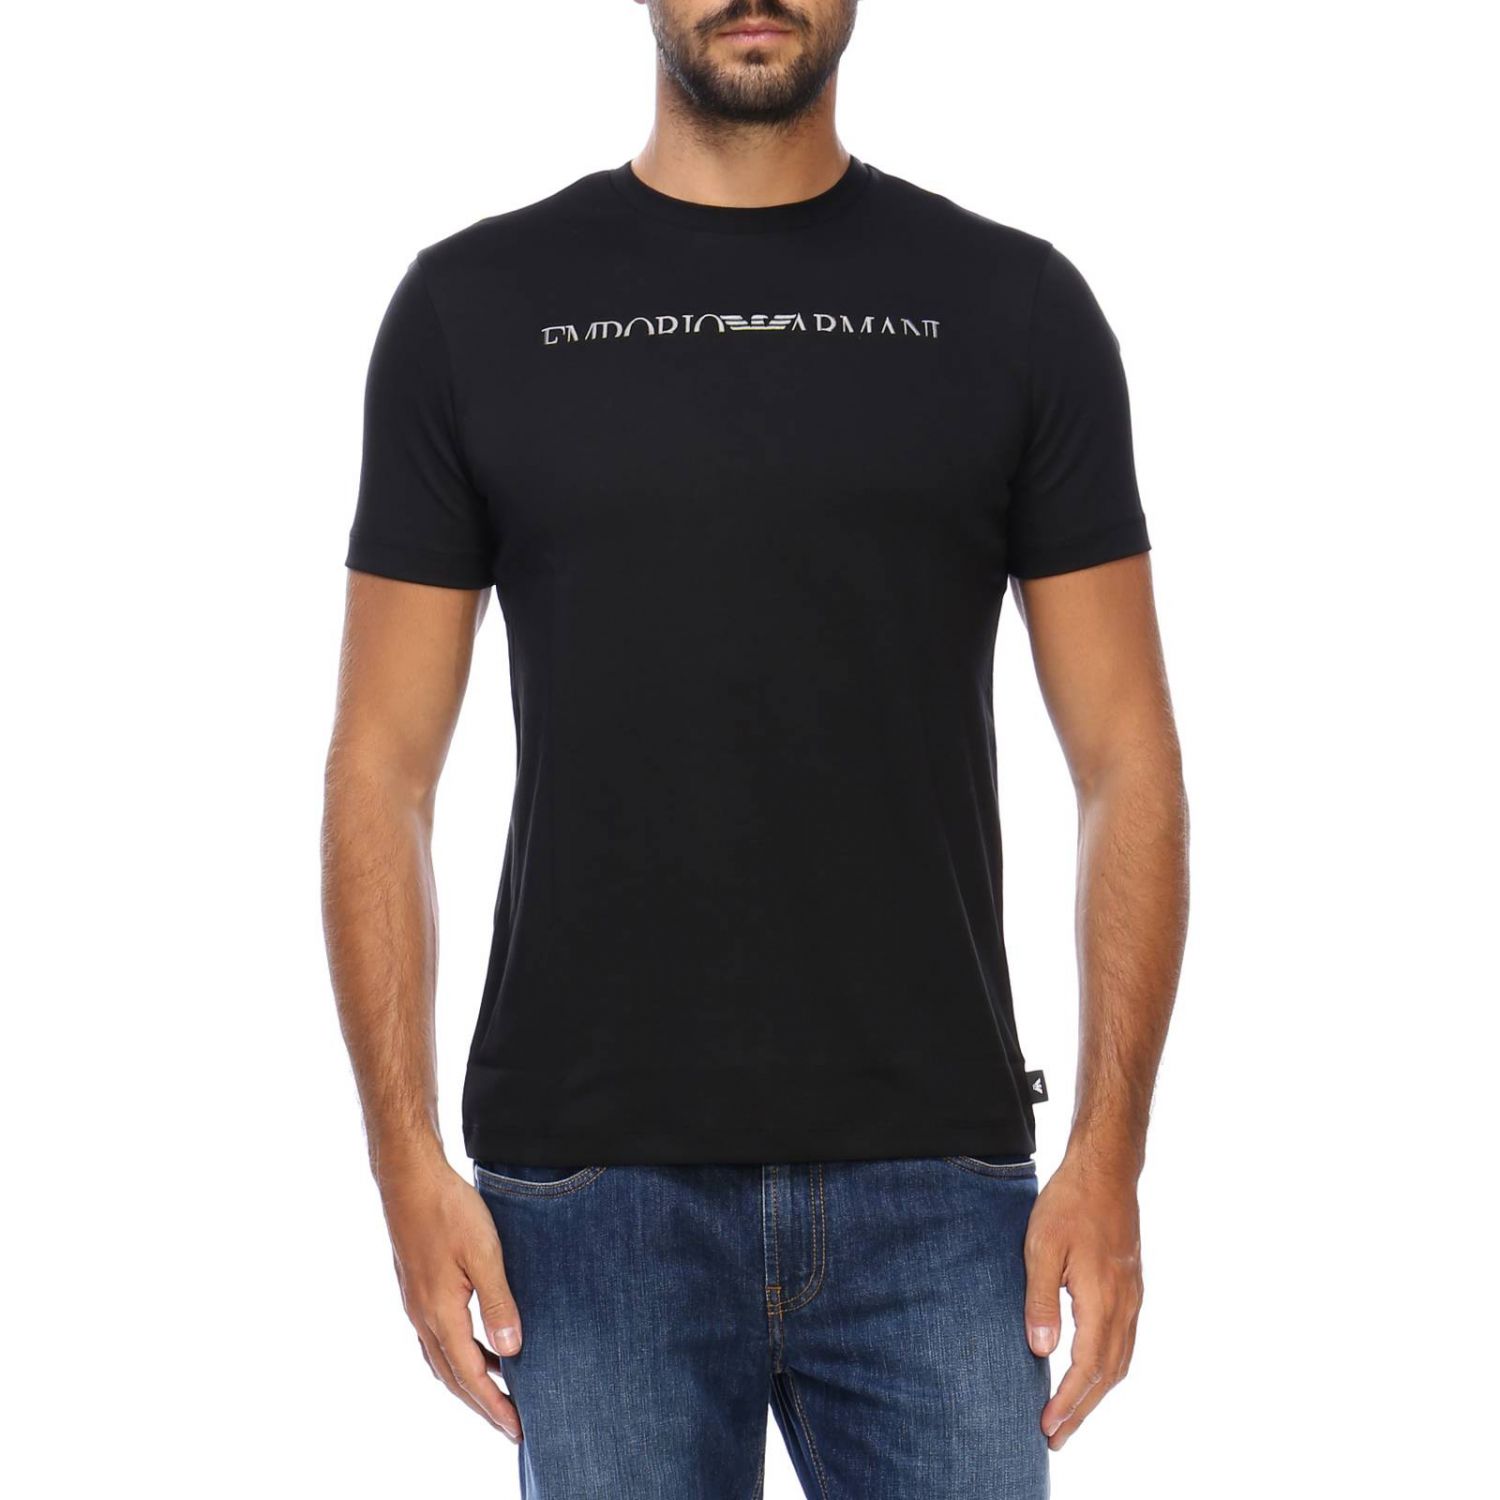 Emporio Armani Outlet: T-shirt men | T-Shirt Emporio Armani Men Black ...